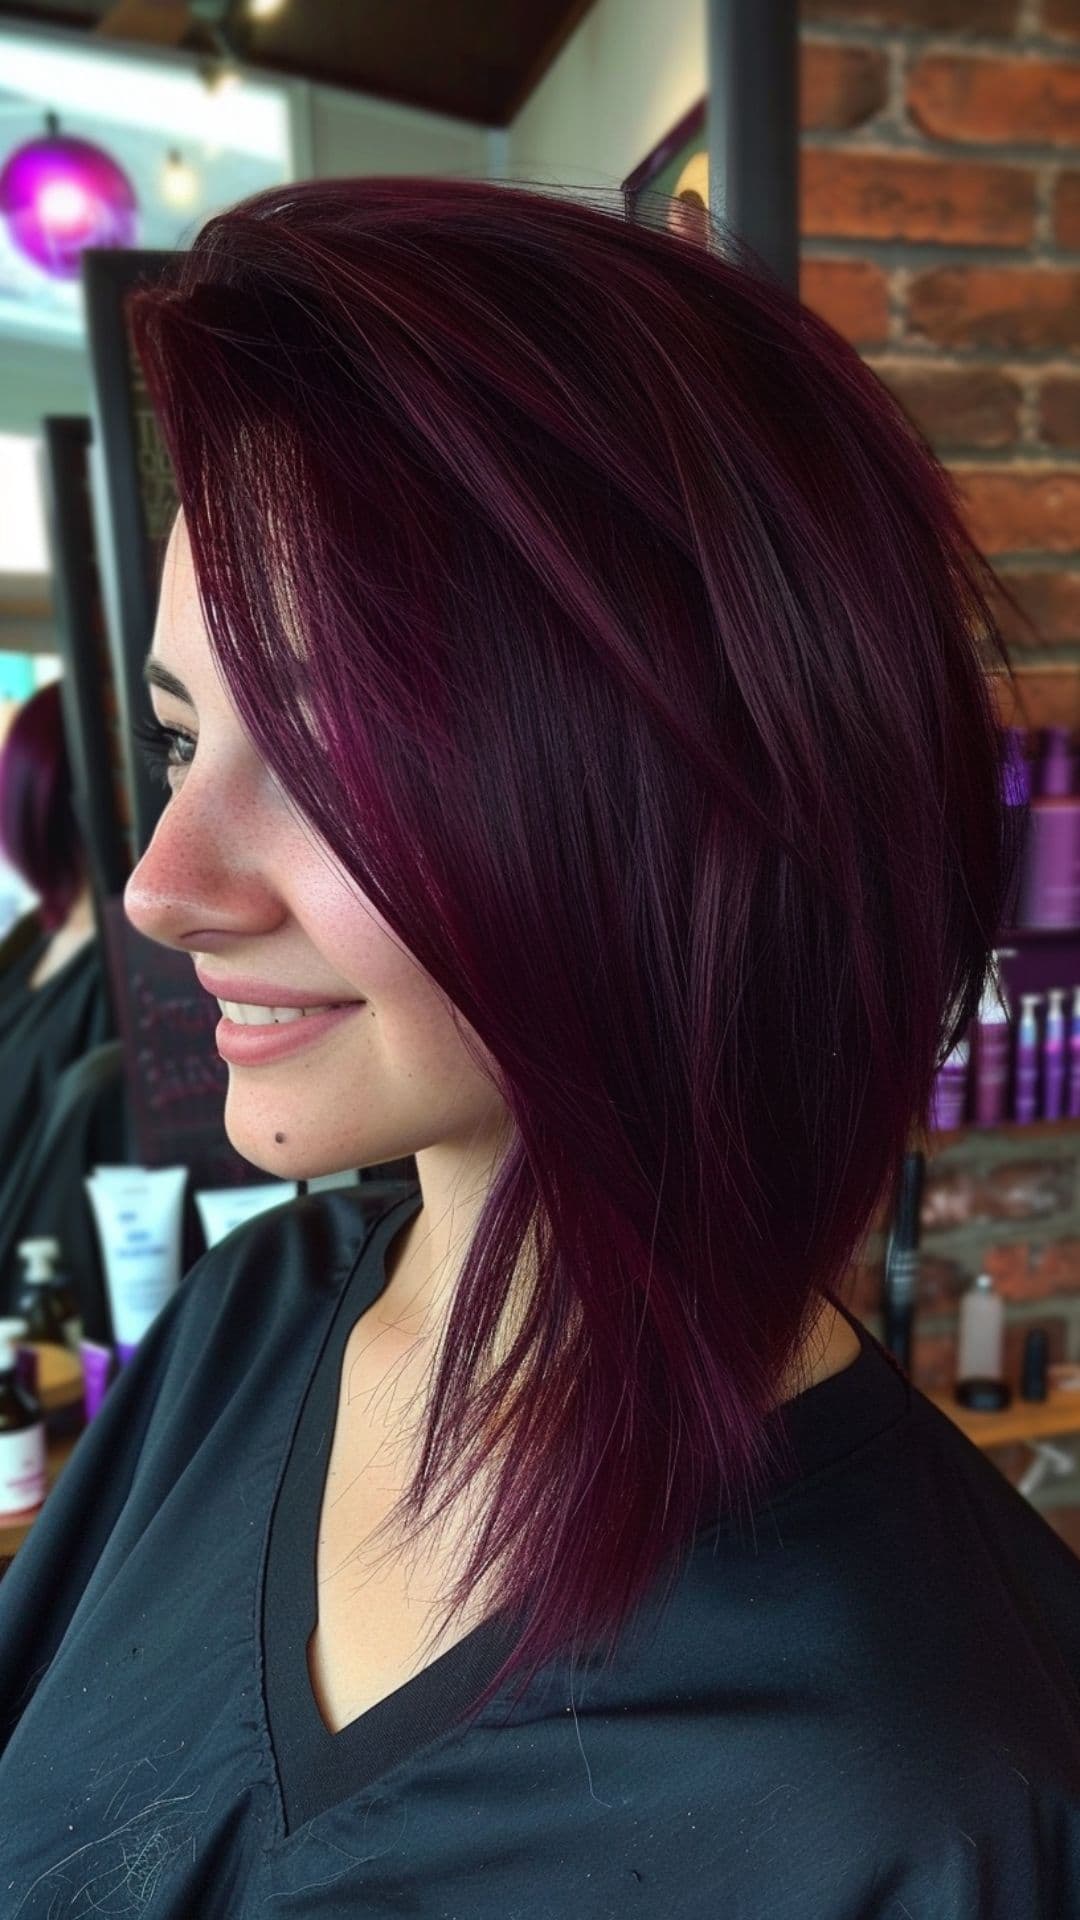 A woman modelling a plum burgundy hair color.